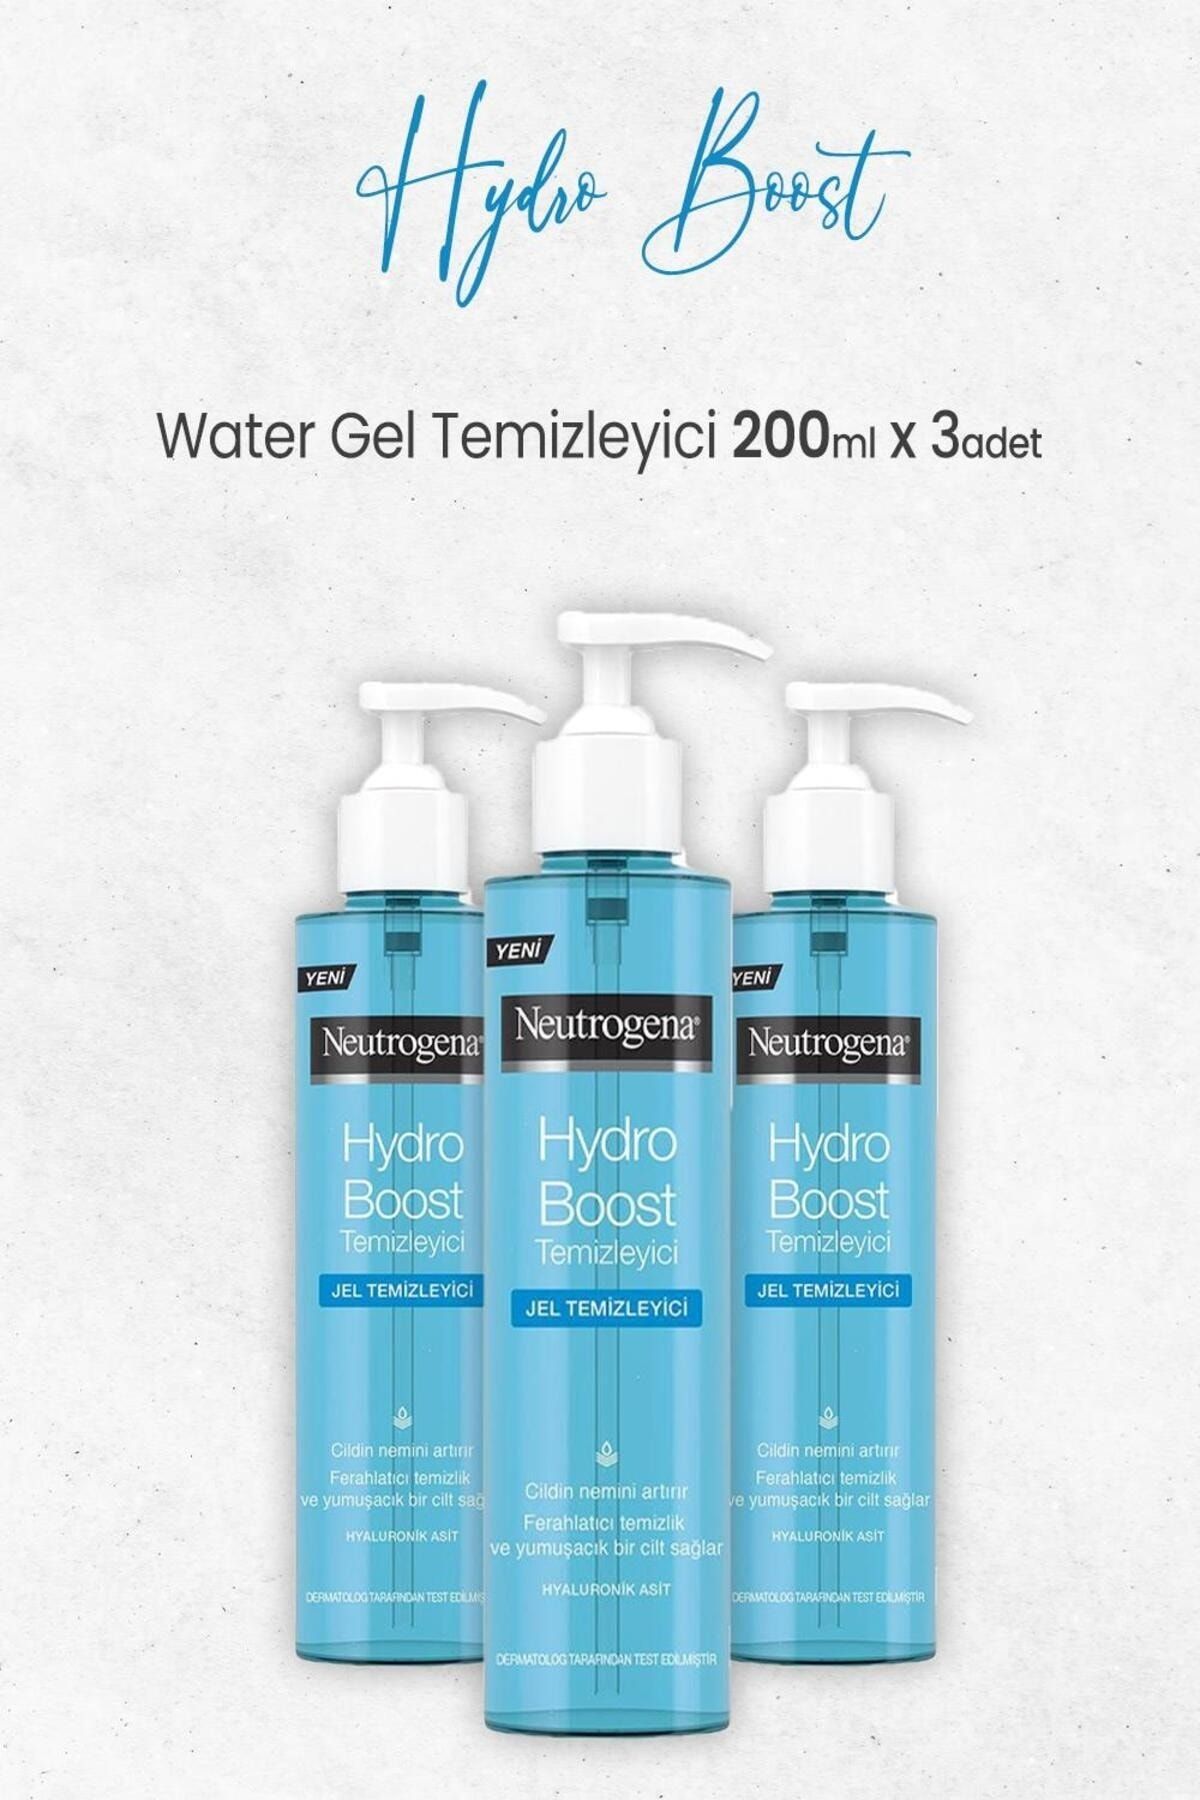 Neutrogena Hydro Boost Water Gel Temizleyici 200 ml x 3 Adet